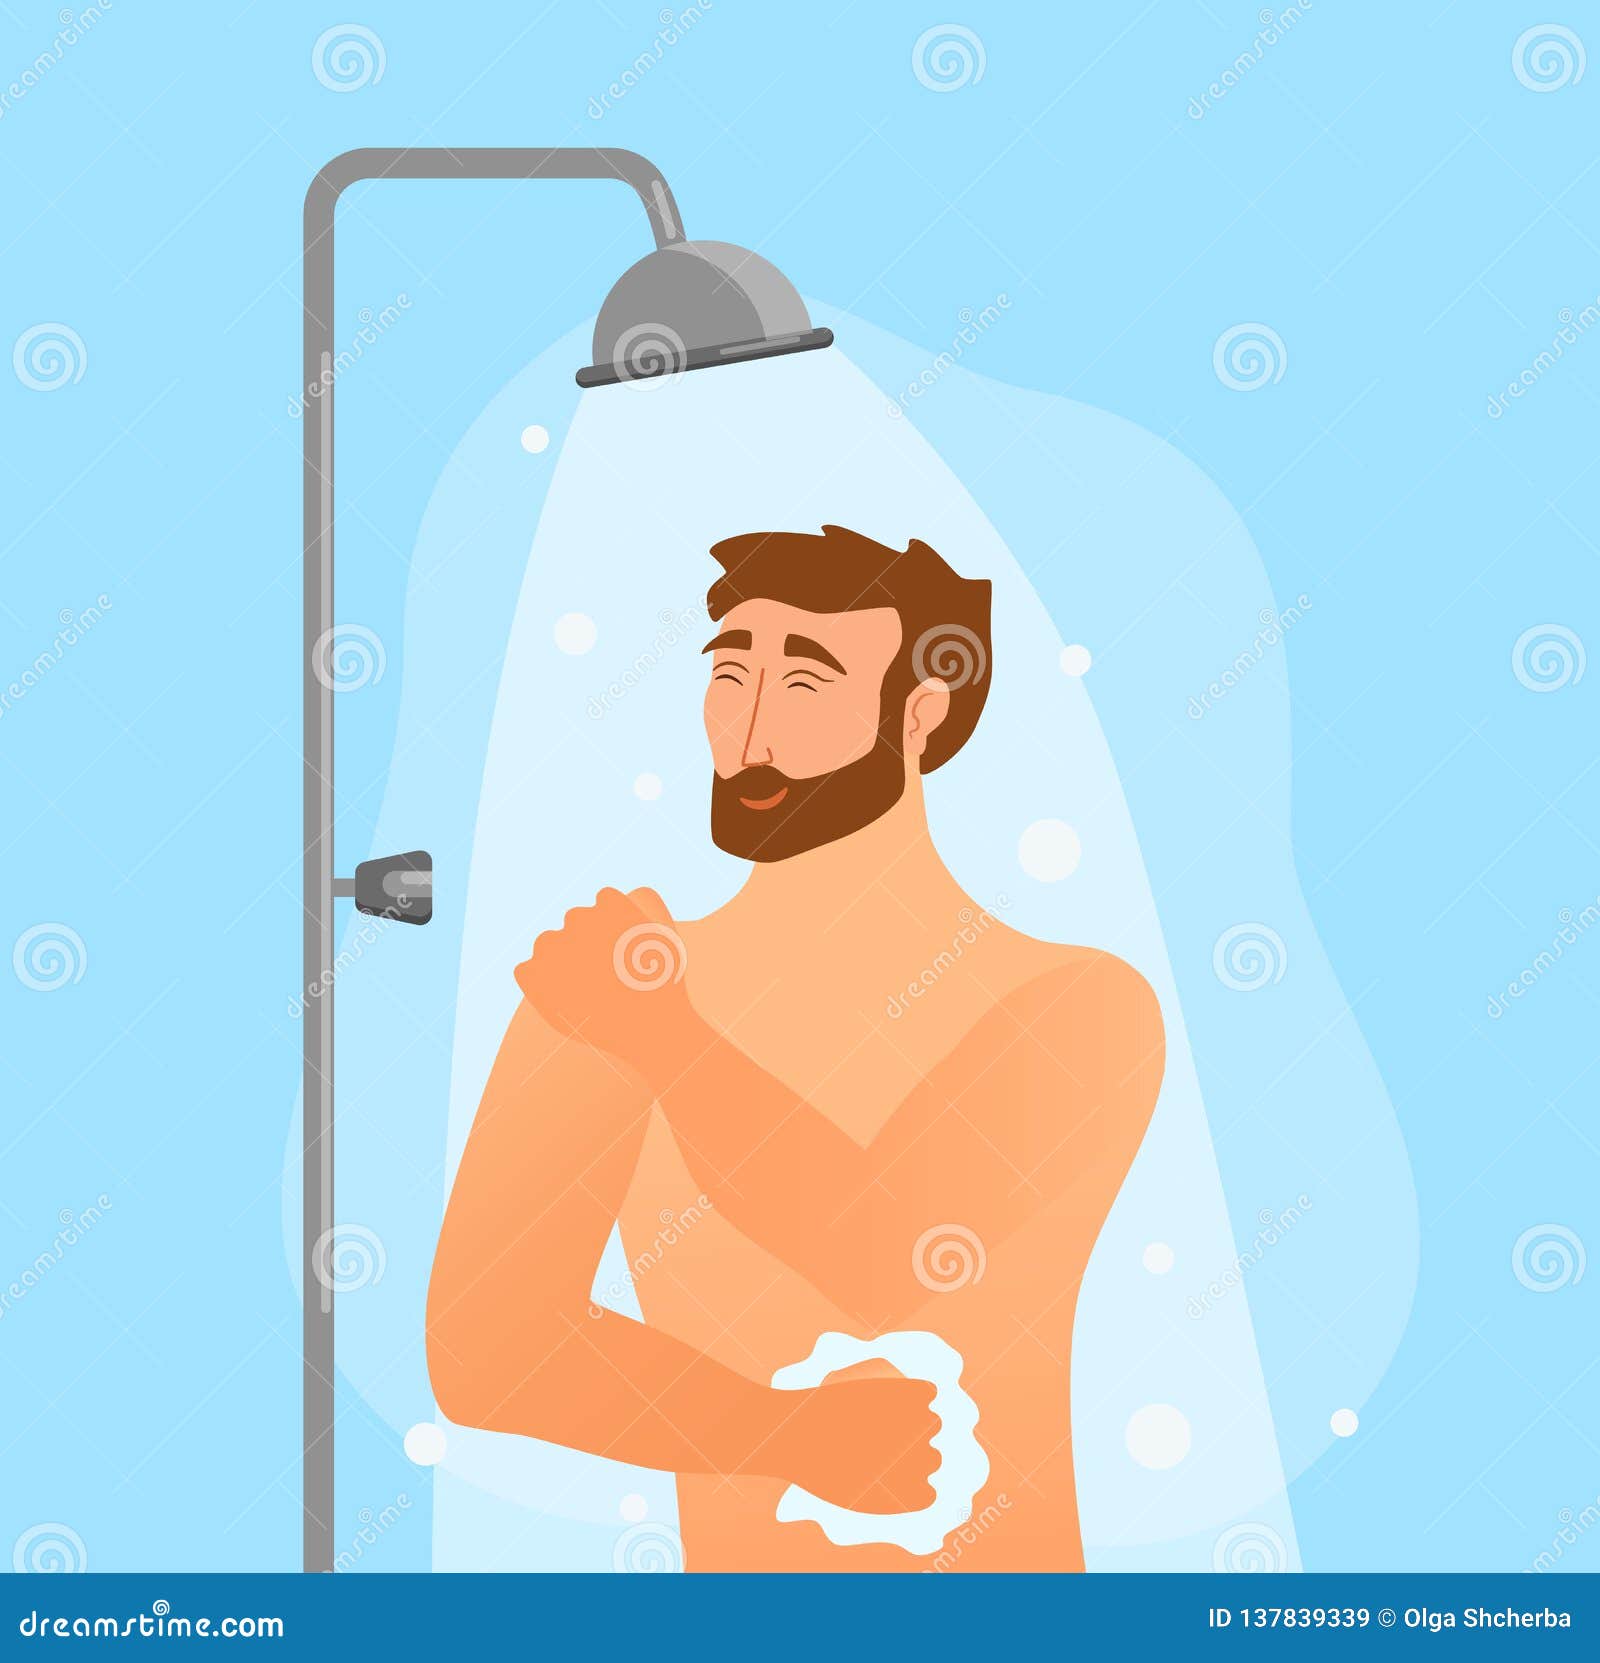 Taking Shower Cartoon Stock Illustrations – 904 Taking Shower Cartoon ...